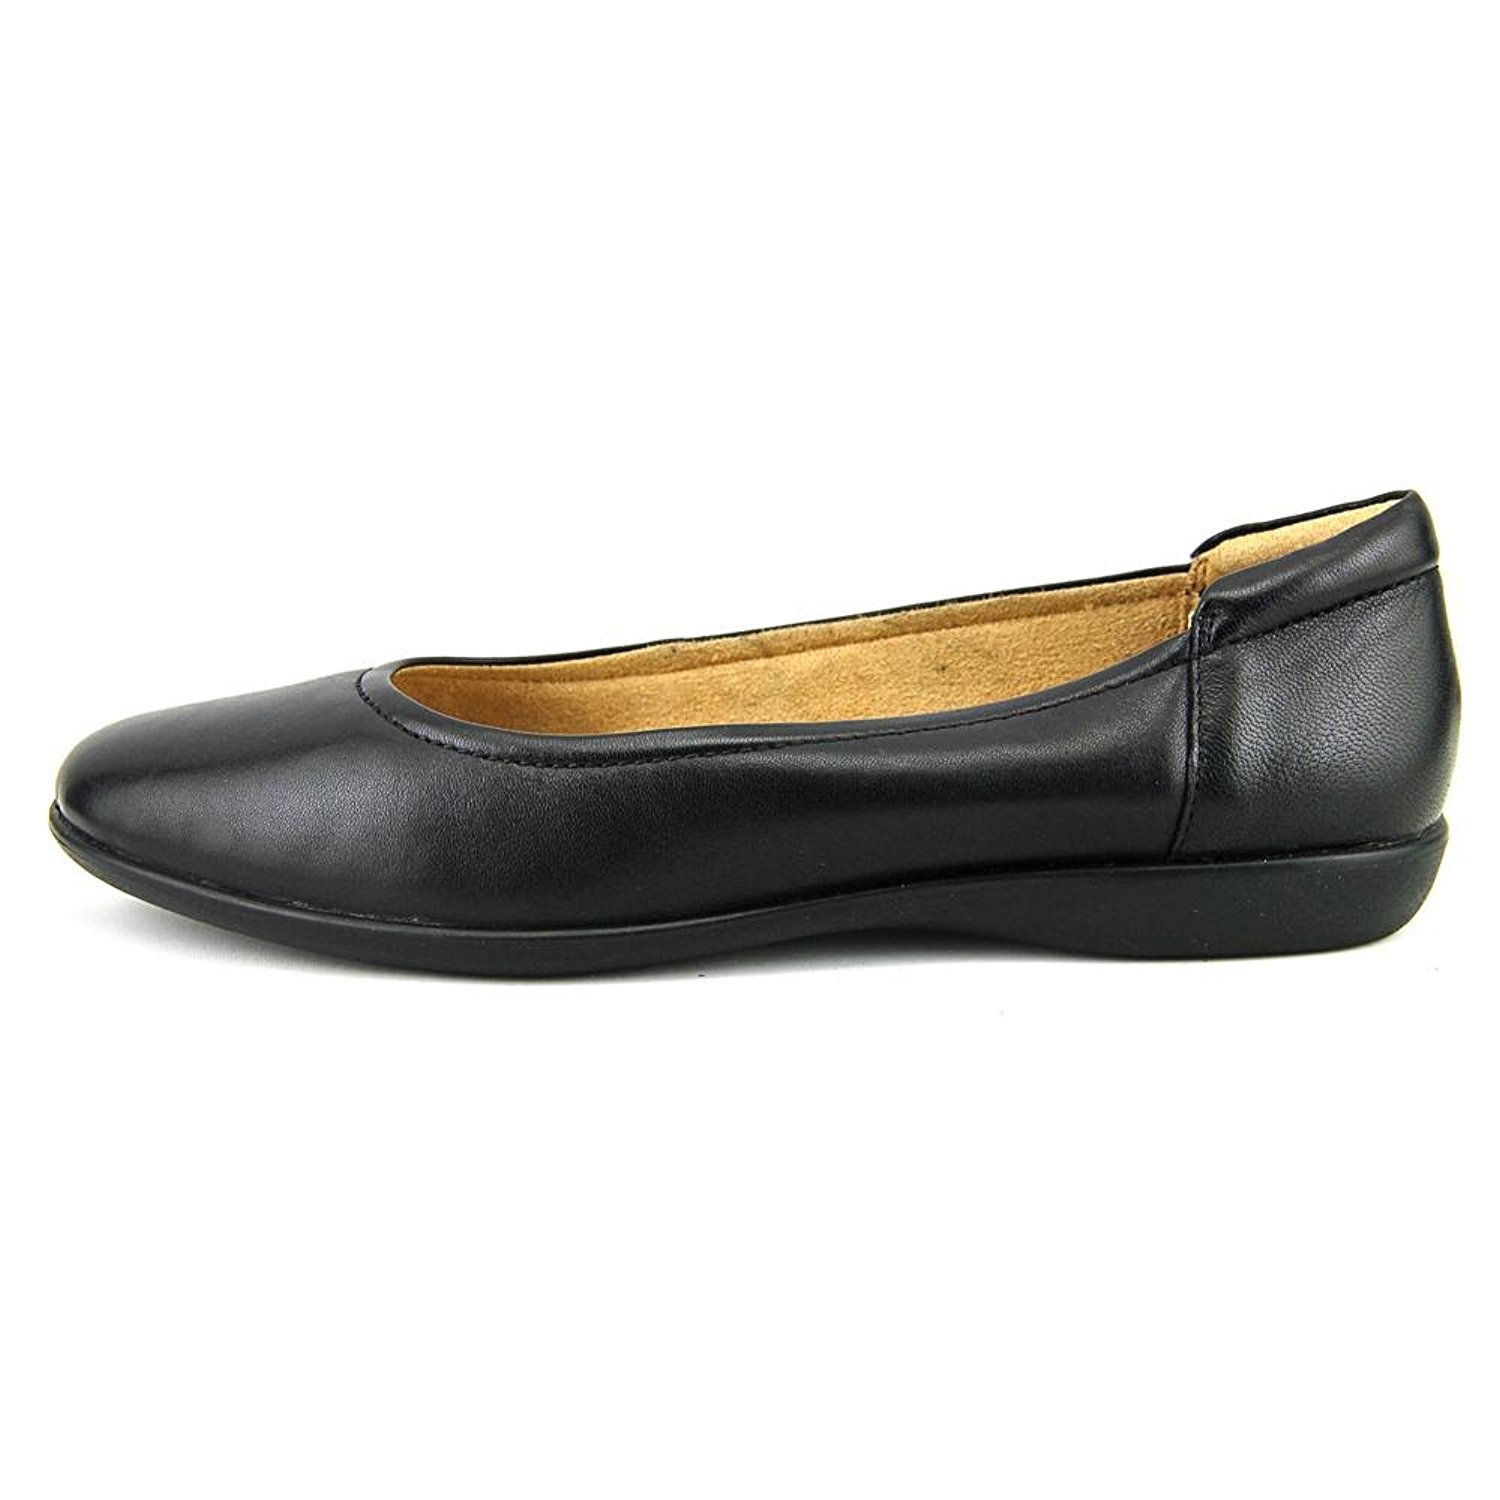 Naturalizer Womens Flexy Leather Round Toe Casual Slide, Black Leather, Size 7.5 | eBay